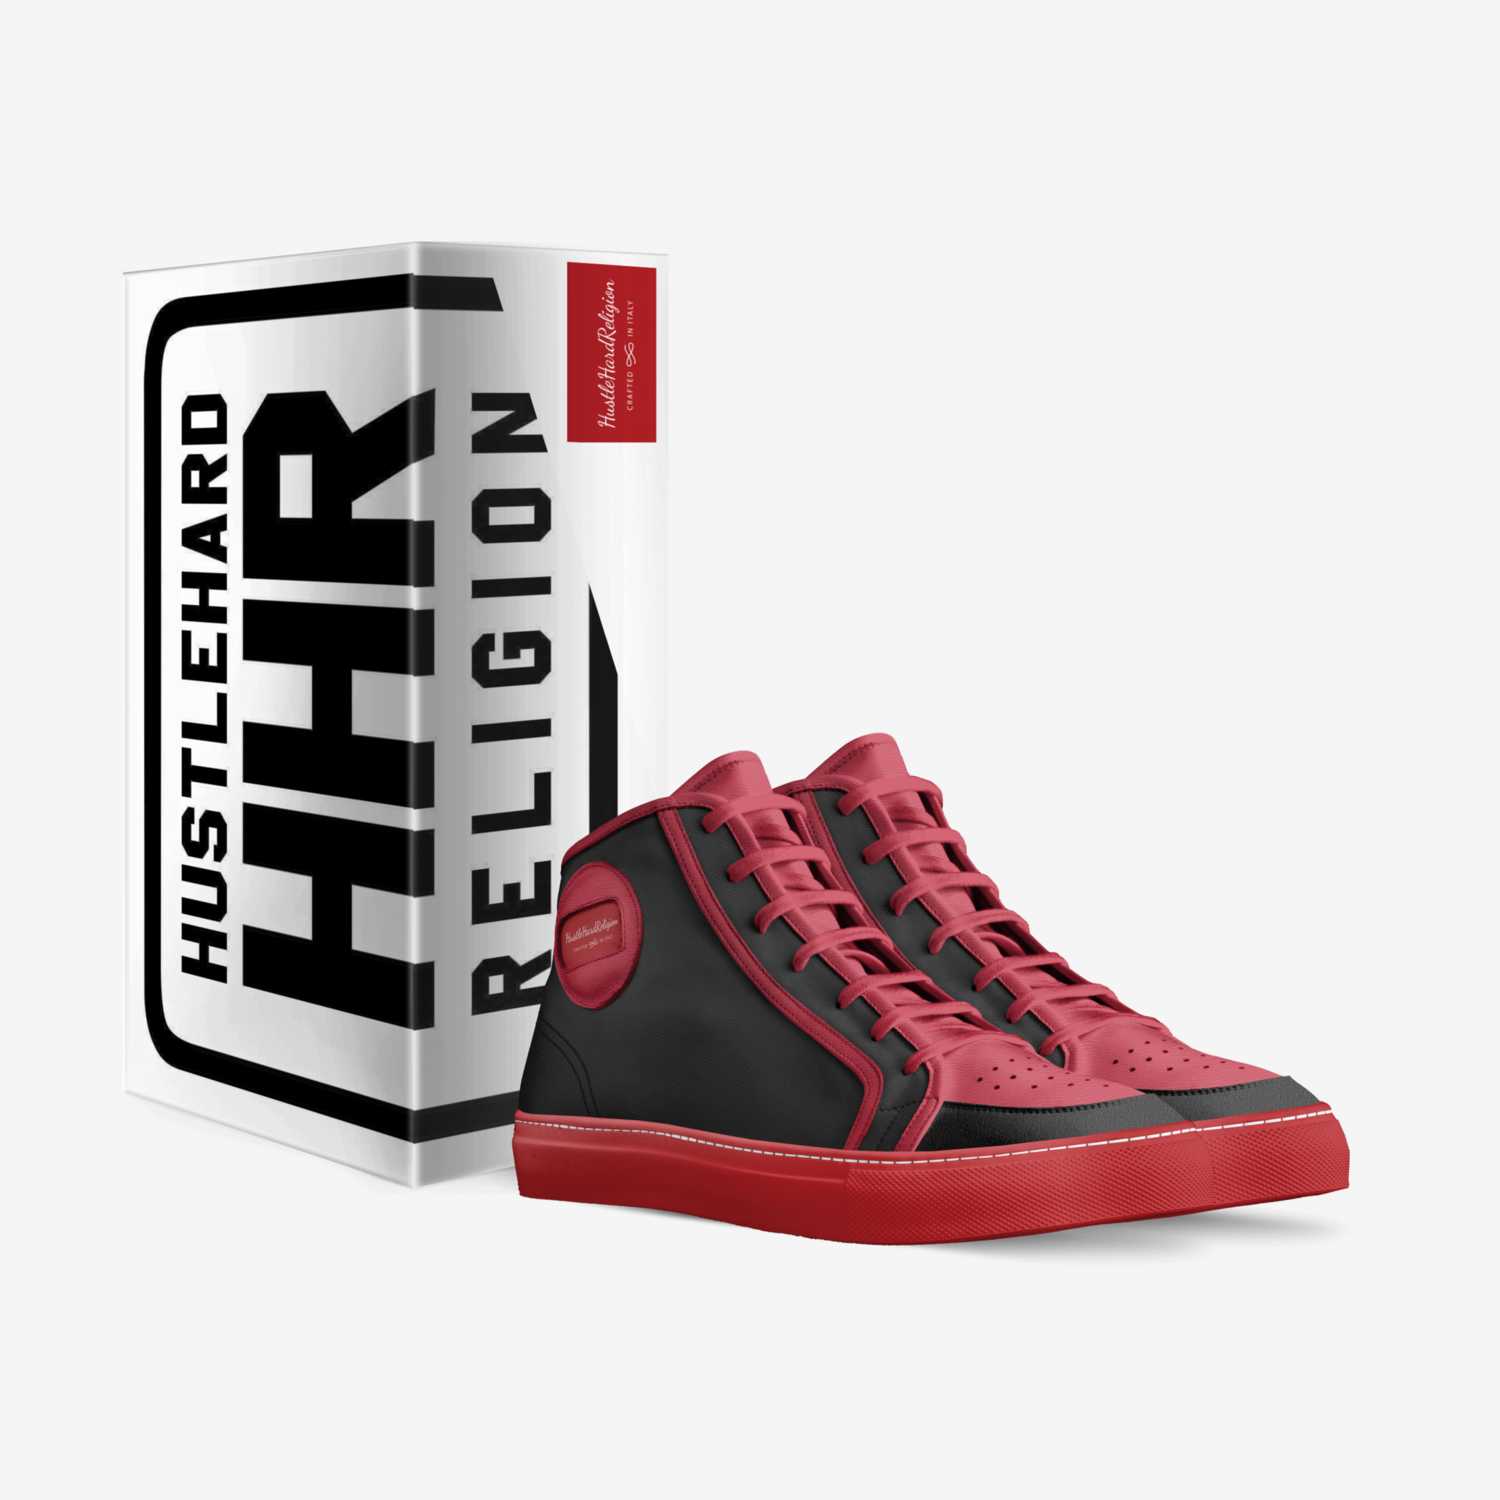 HustleHardReligion custom made in Italy shoes by Capn Kirk | Box view